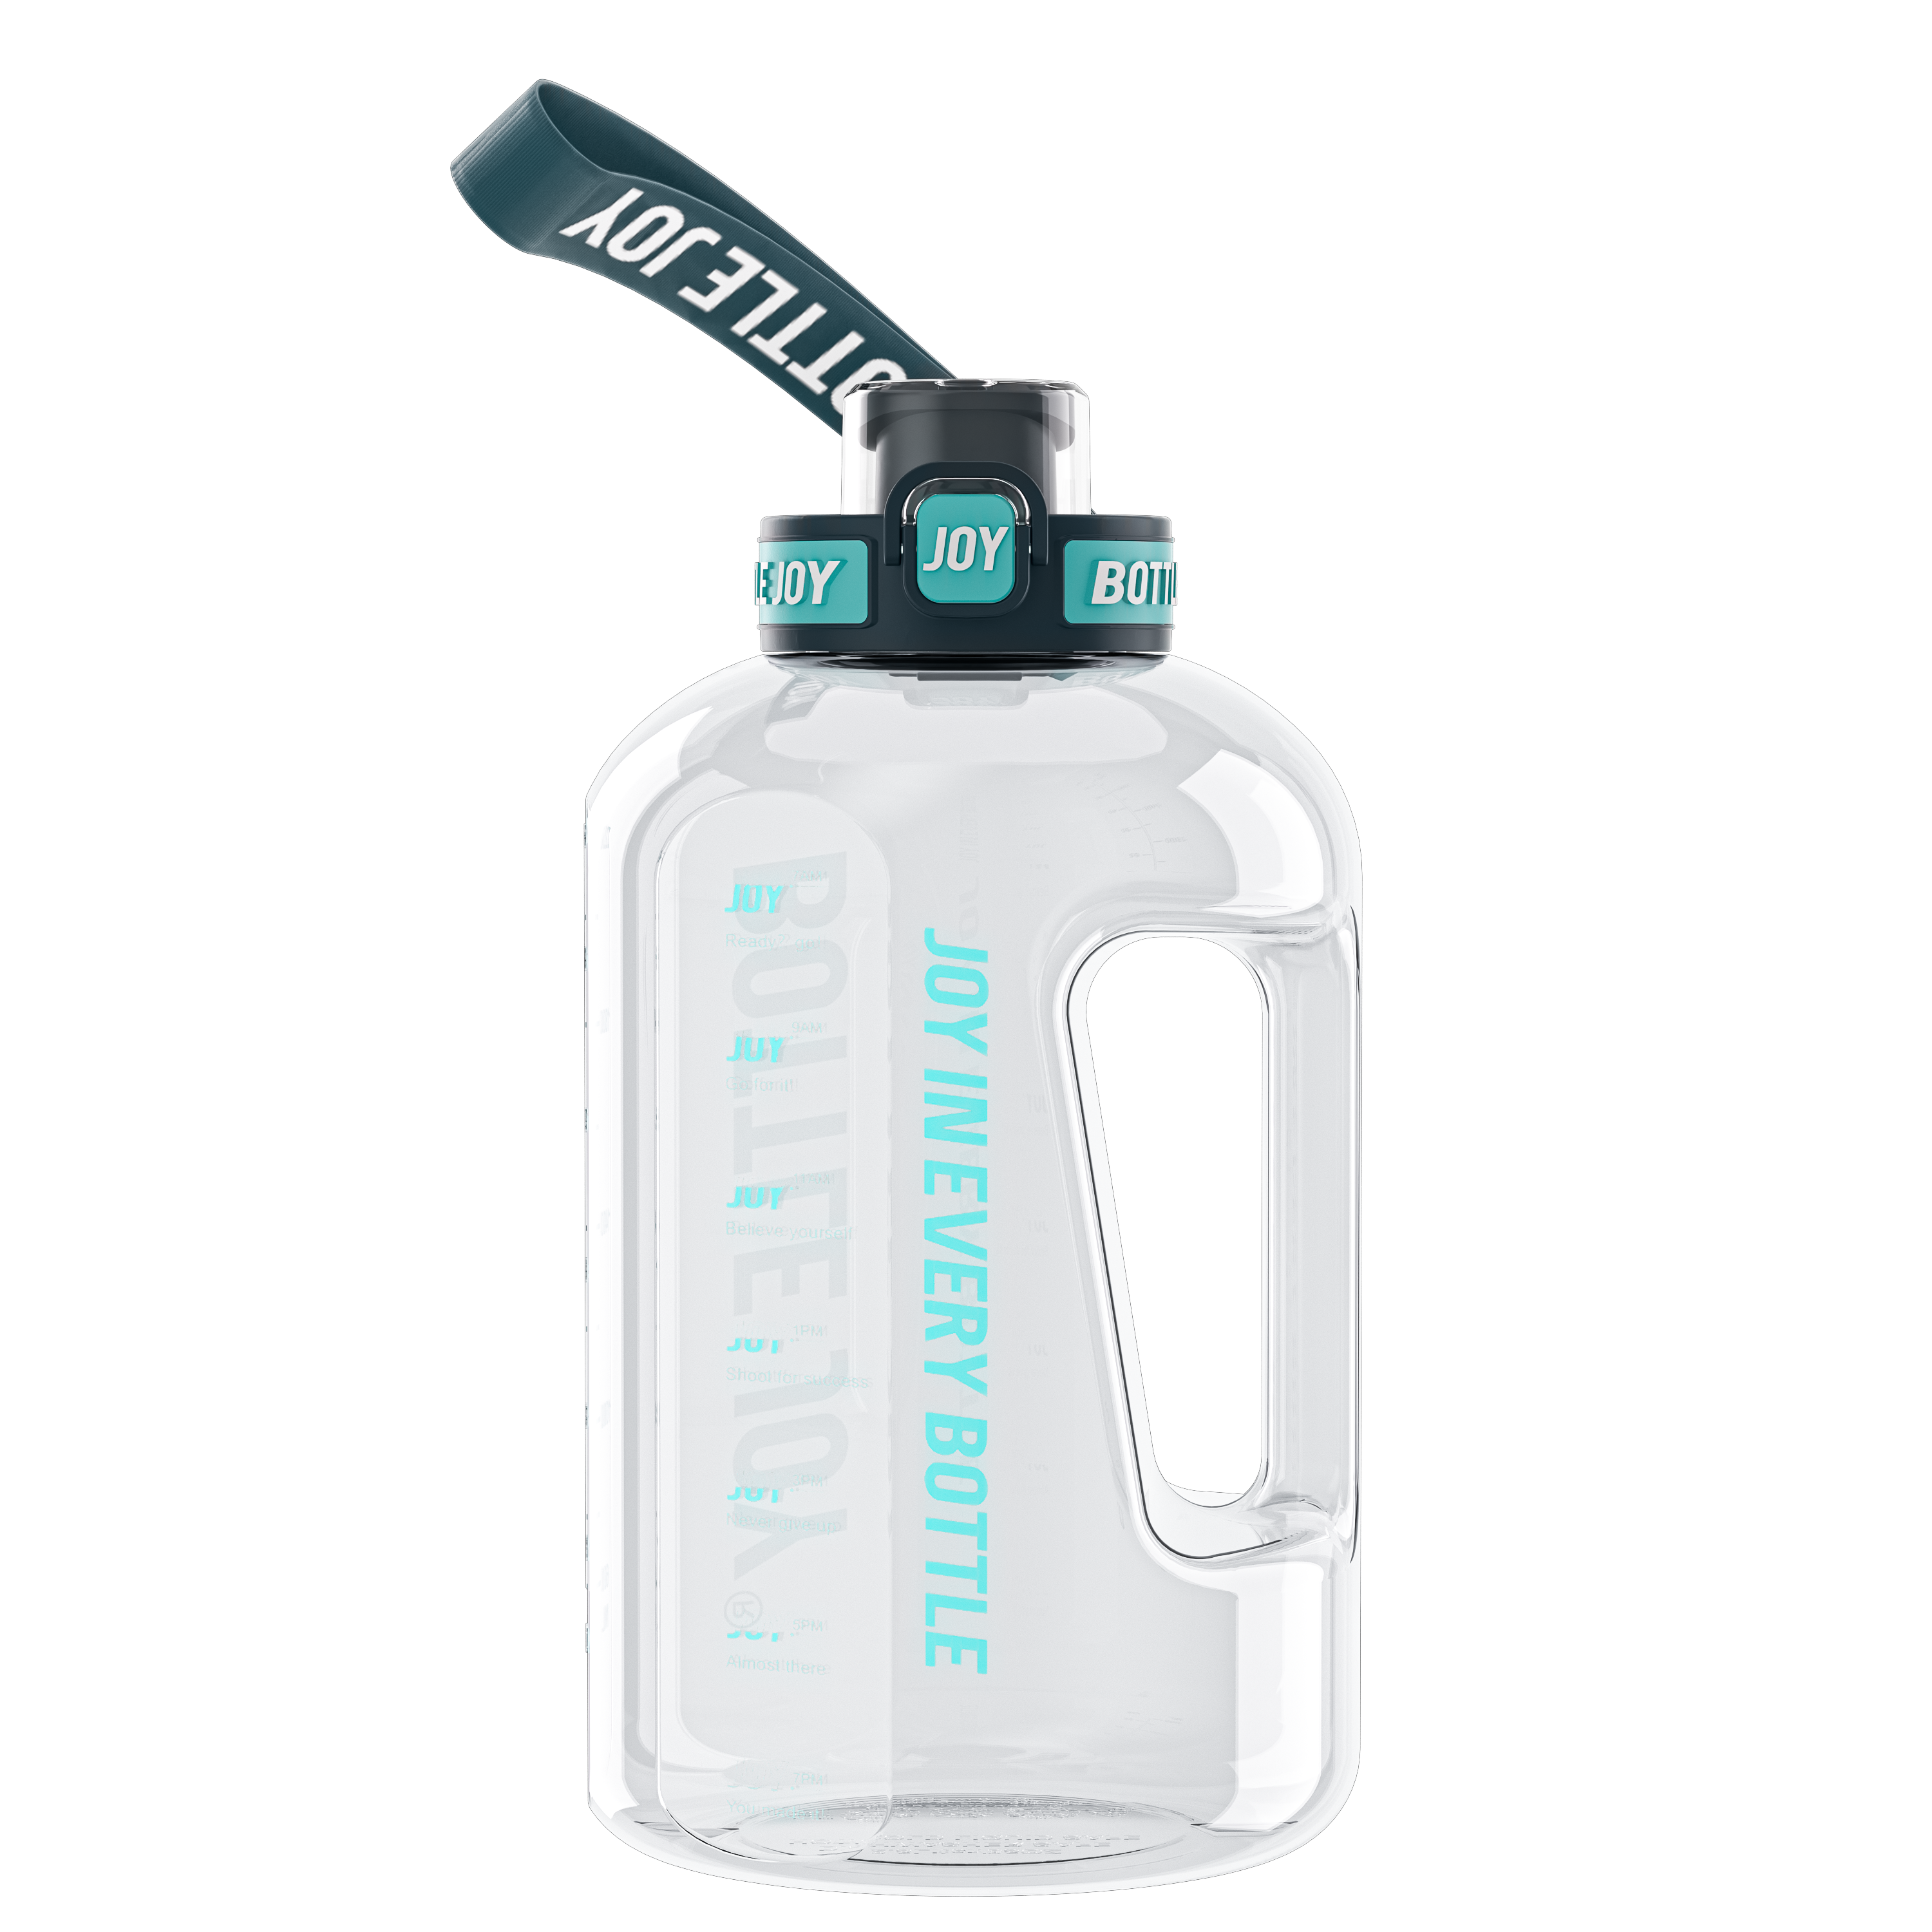 Water Jug - 2.5L Big Water Bottle Large Reusable Water Bottle